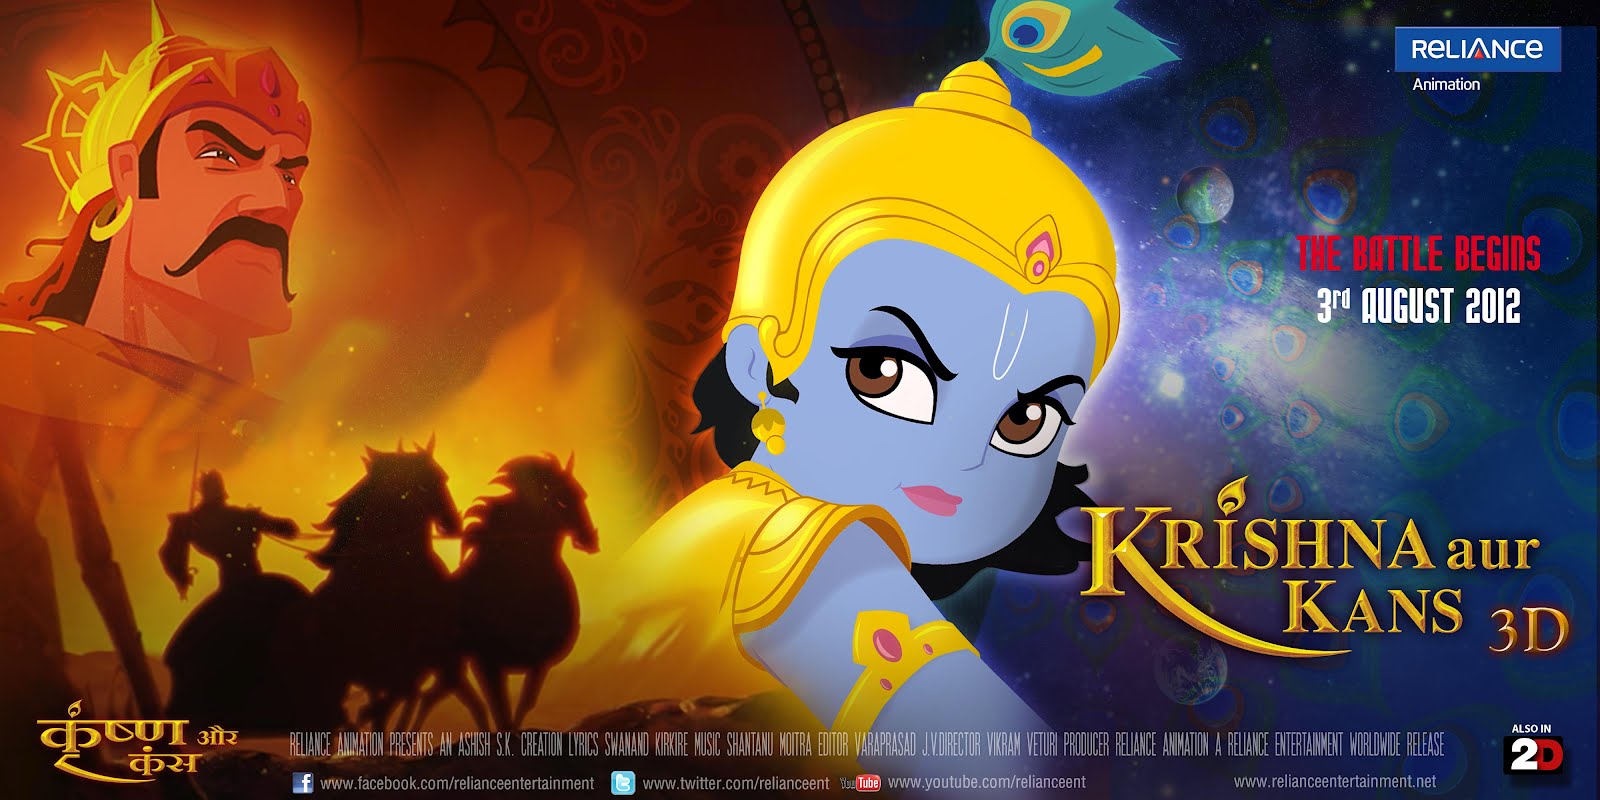 Krishna Aur Kans 3D | ISKCON Temples Events, News, Information